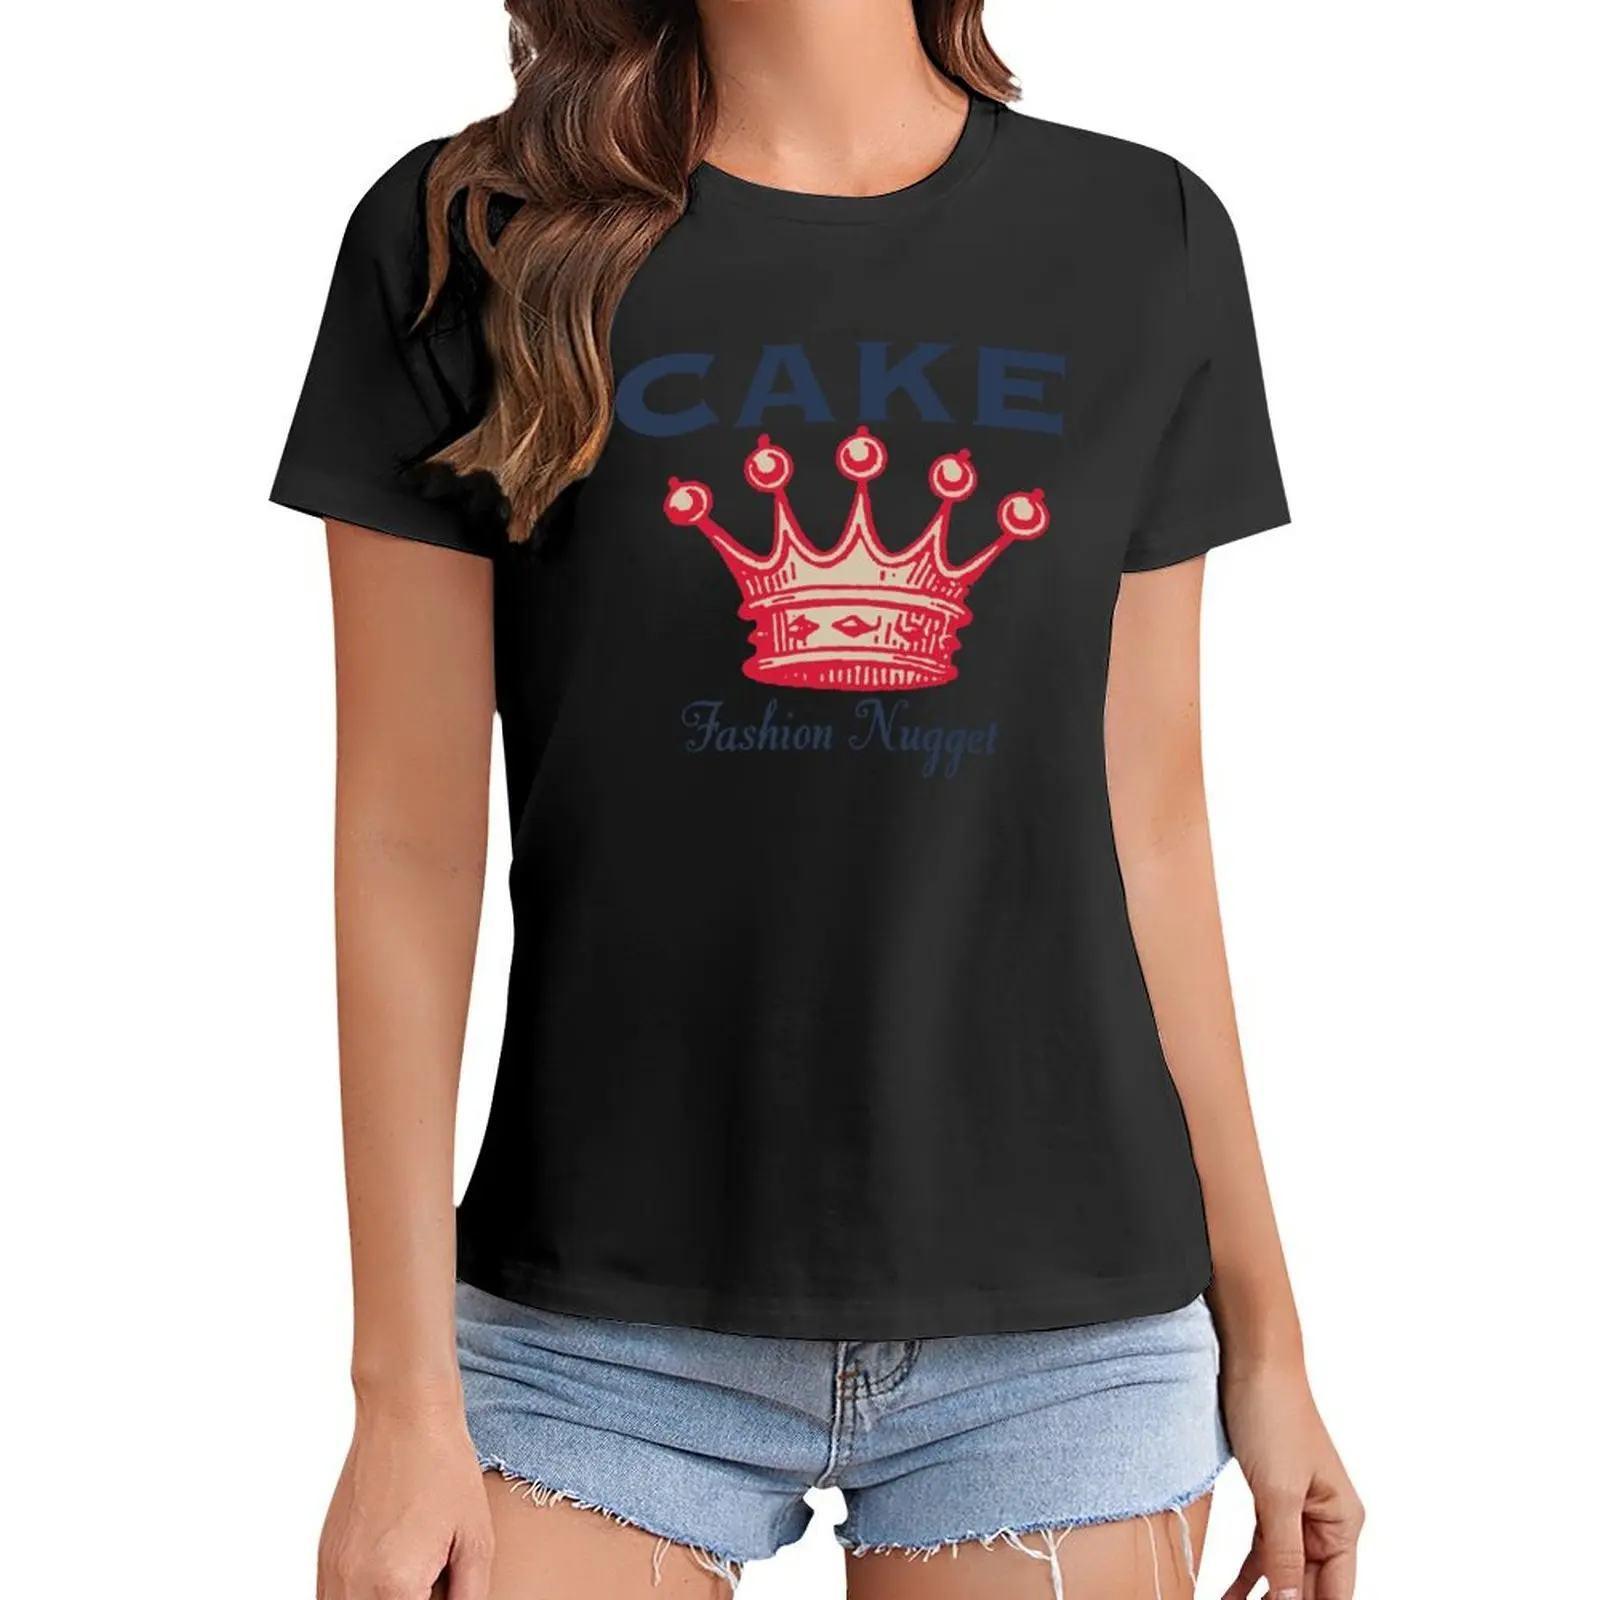 

Cake: Fashion Nugget (Featuring The Distance) T-Shirt summer top anime t shirt Women